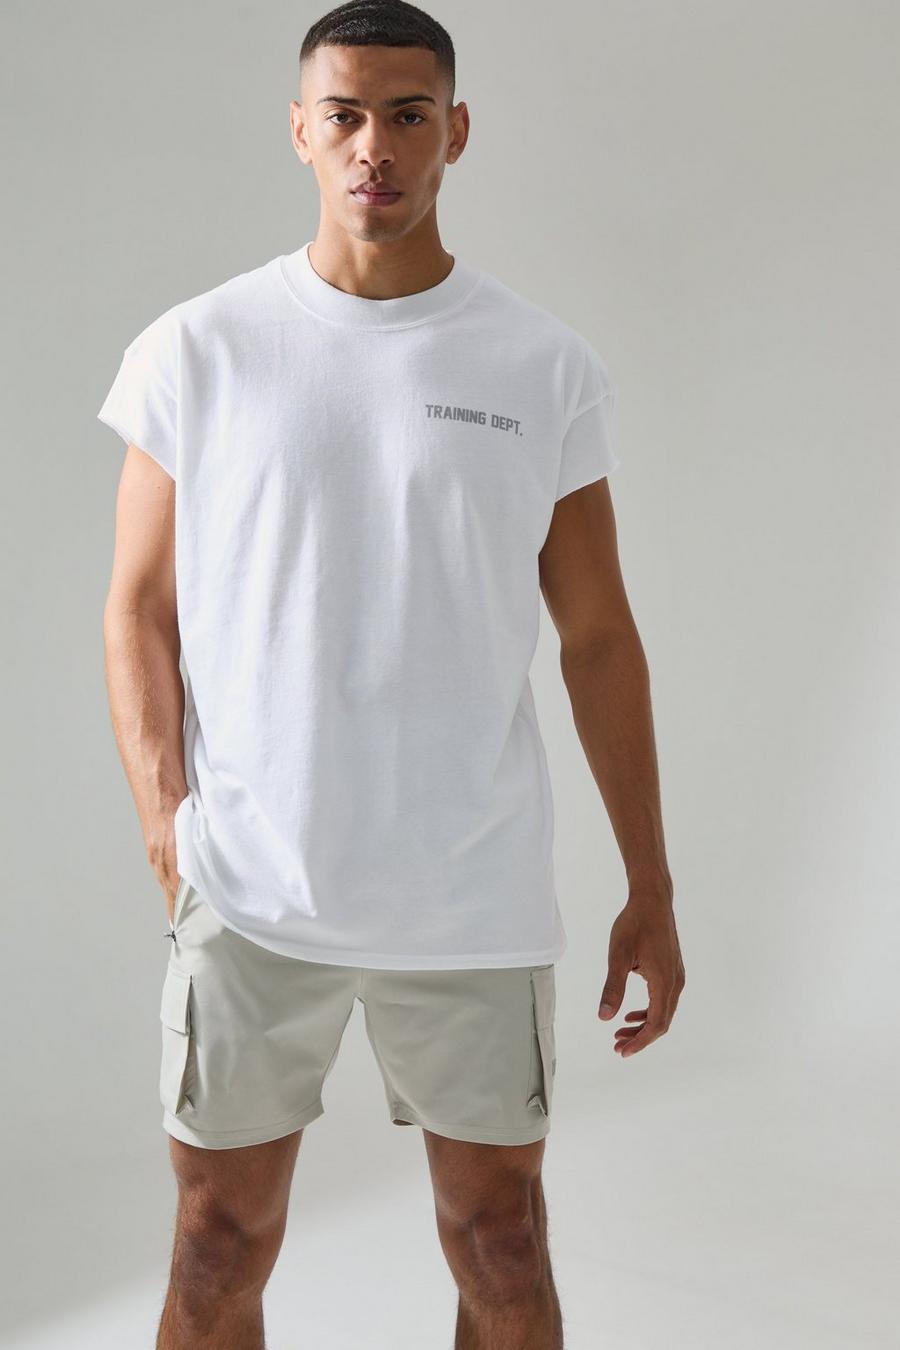 Oversize T-Shirt mit Active Training Dept Print, White